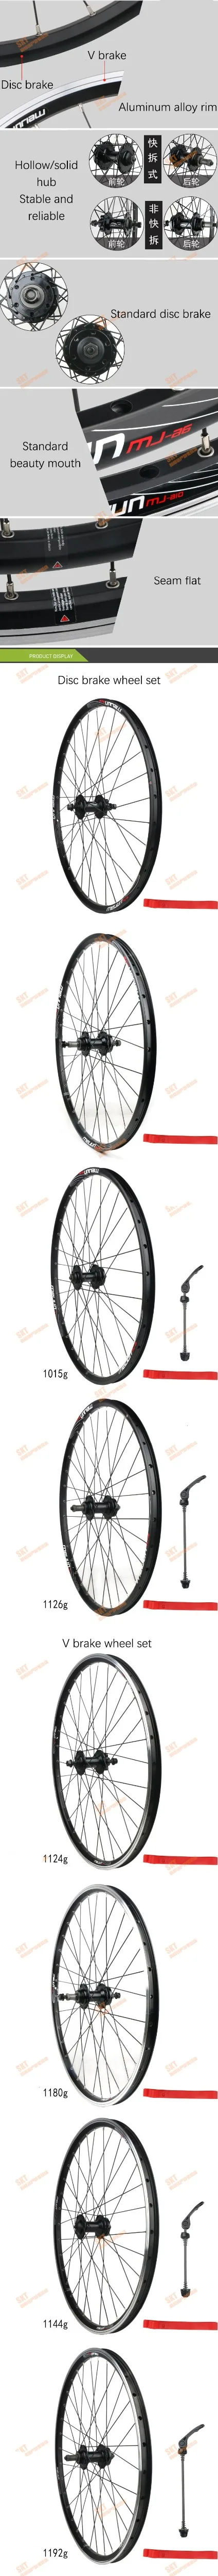 Clearance a06 26 inch bicycle Wheel 2 bearing cassette hub 319 aluminum alloy rim mountain bike spokes wheel 0